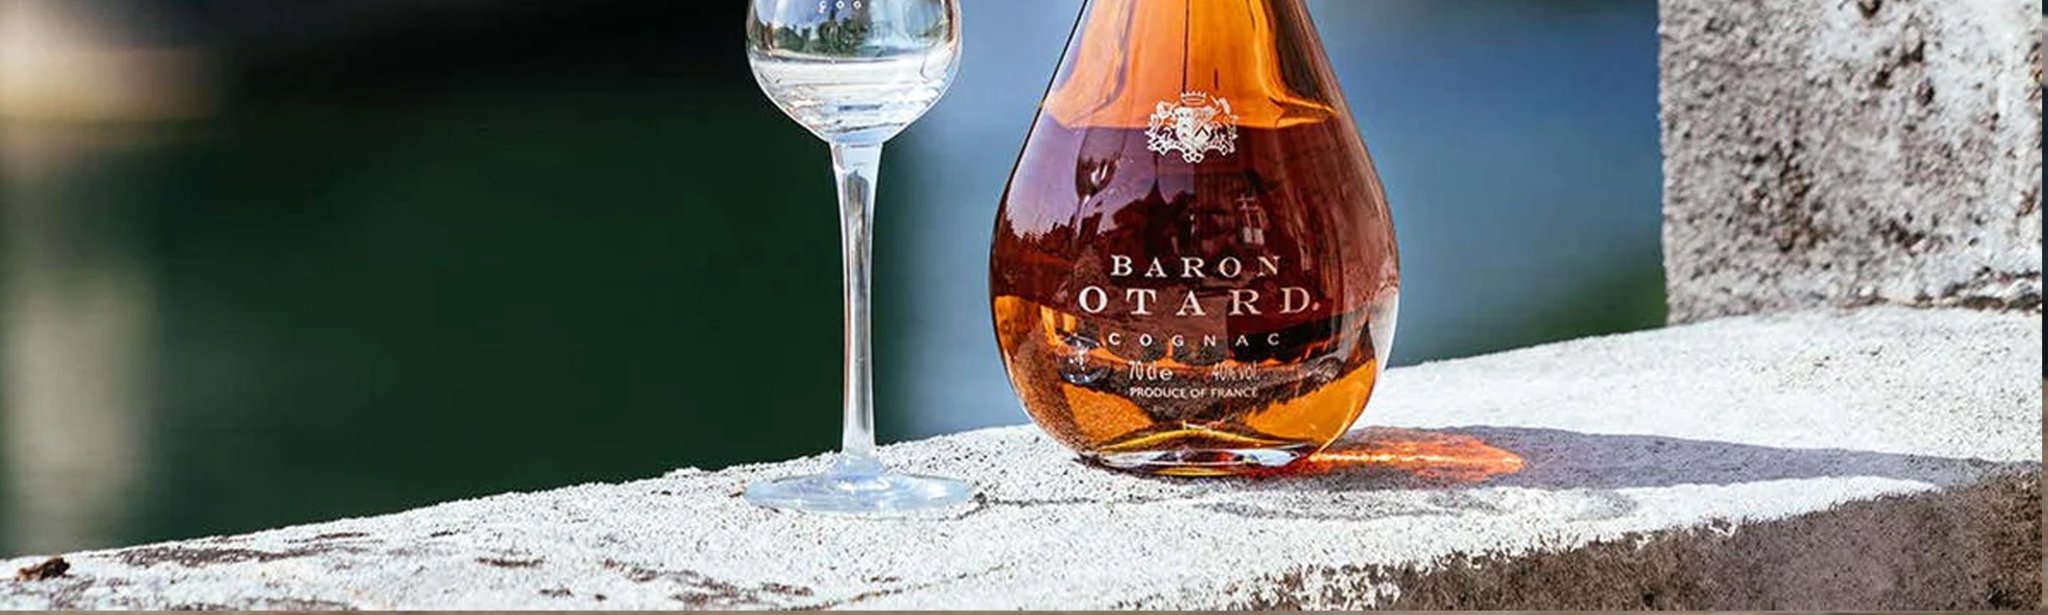 Baron Otard Cognac - The Bottle Club